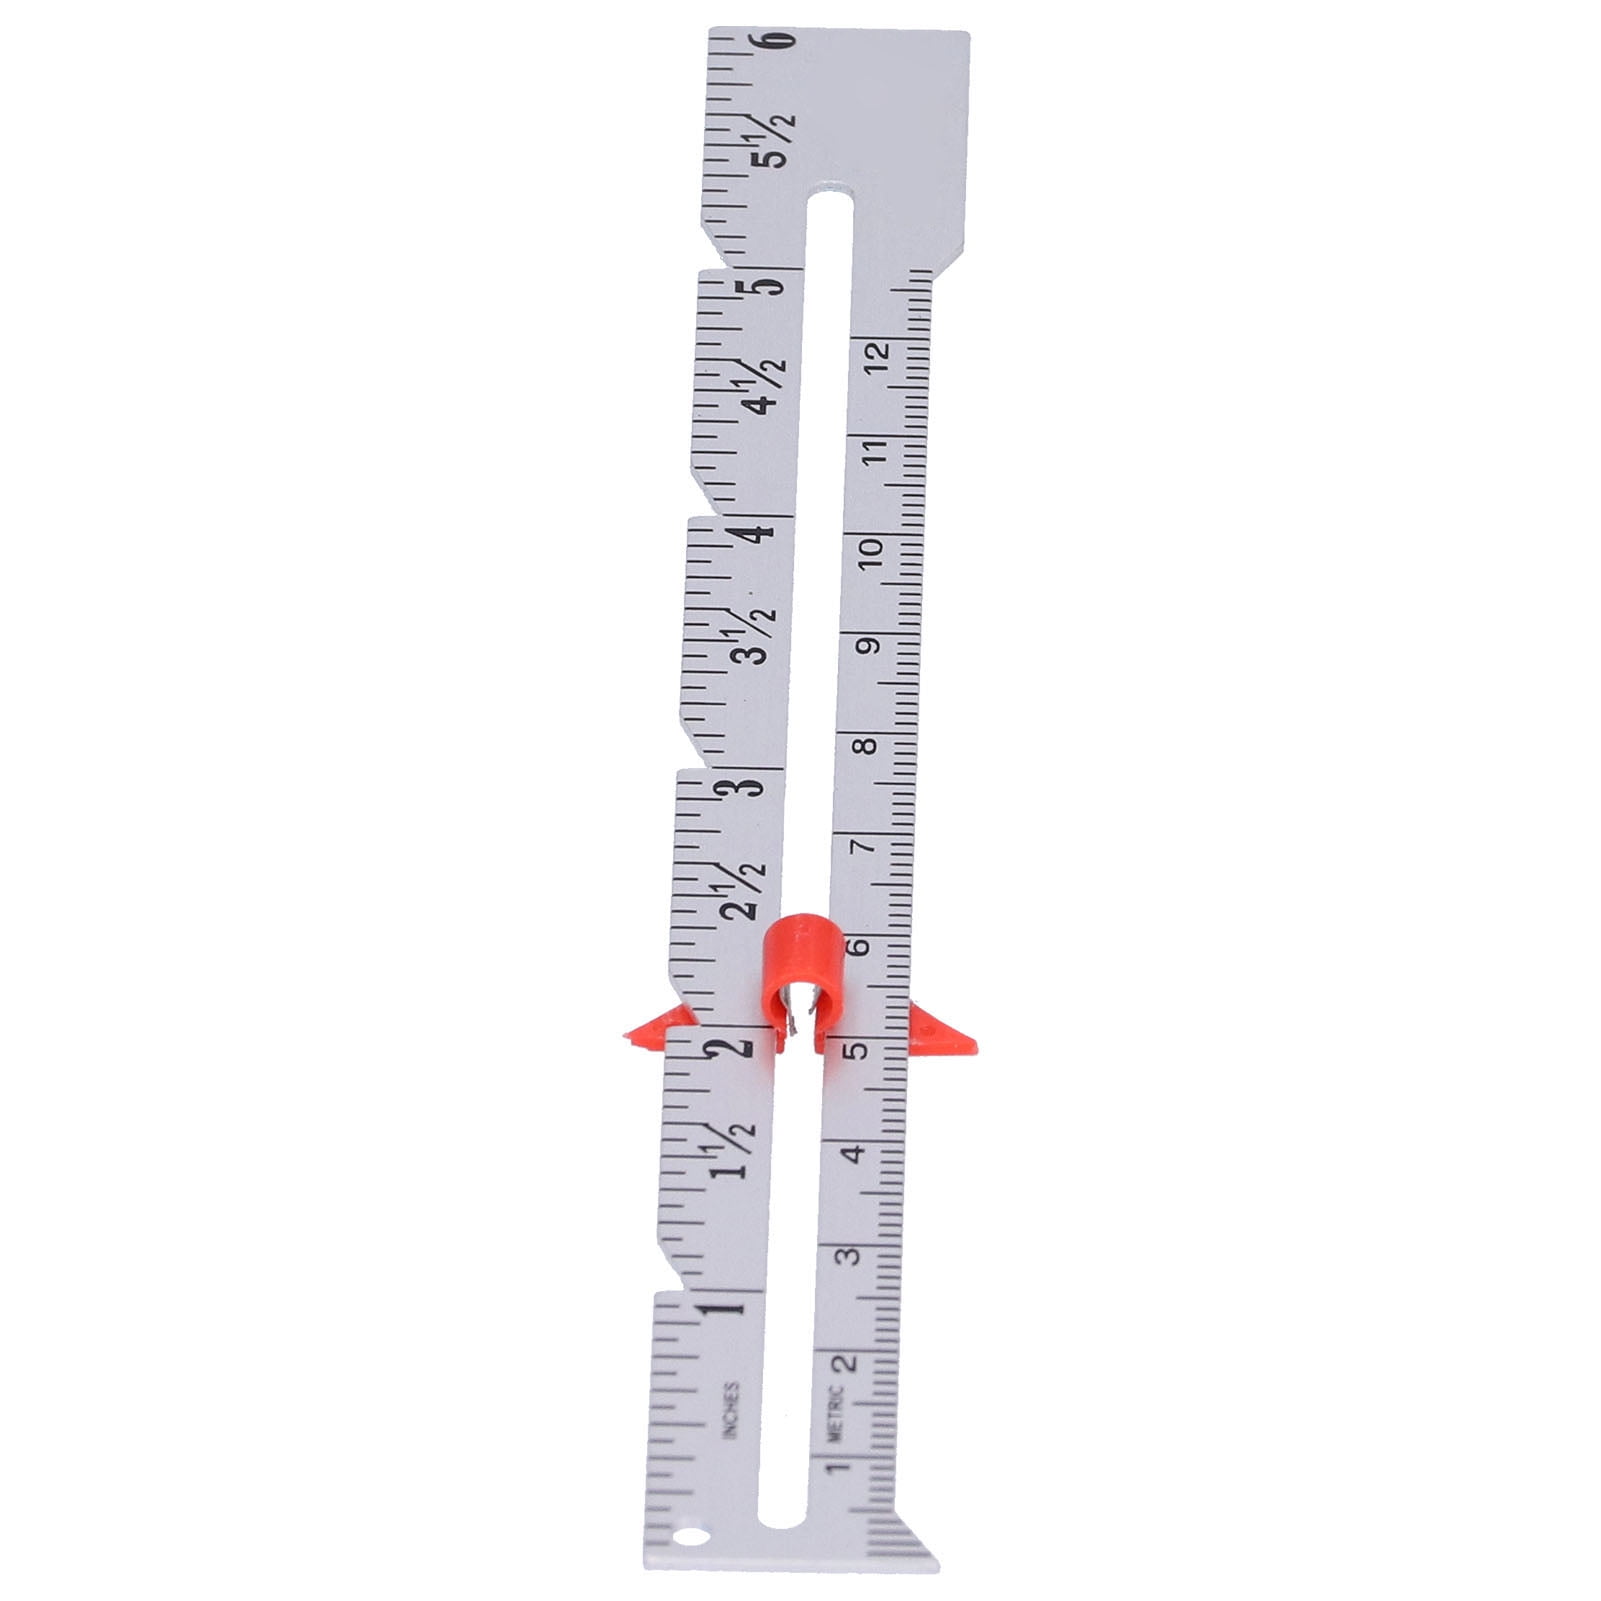 Pro Sewing Measuring Gauge Measure Ruler with Sliding Adjustable Marker Knitting Sewing Supplies Marking Button Holes Handamde Craft 6'', Size: 15 cm